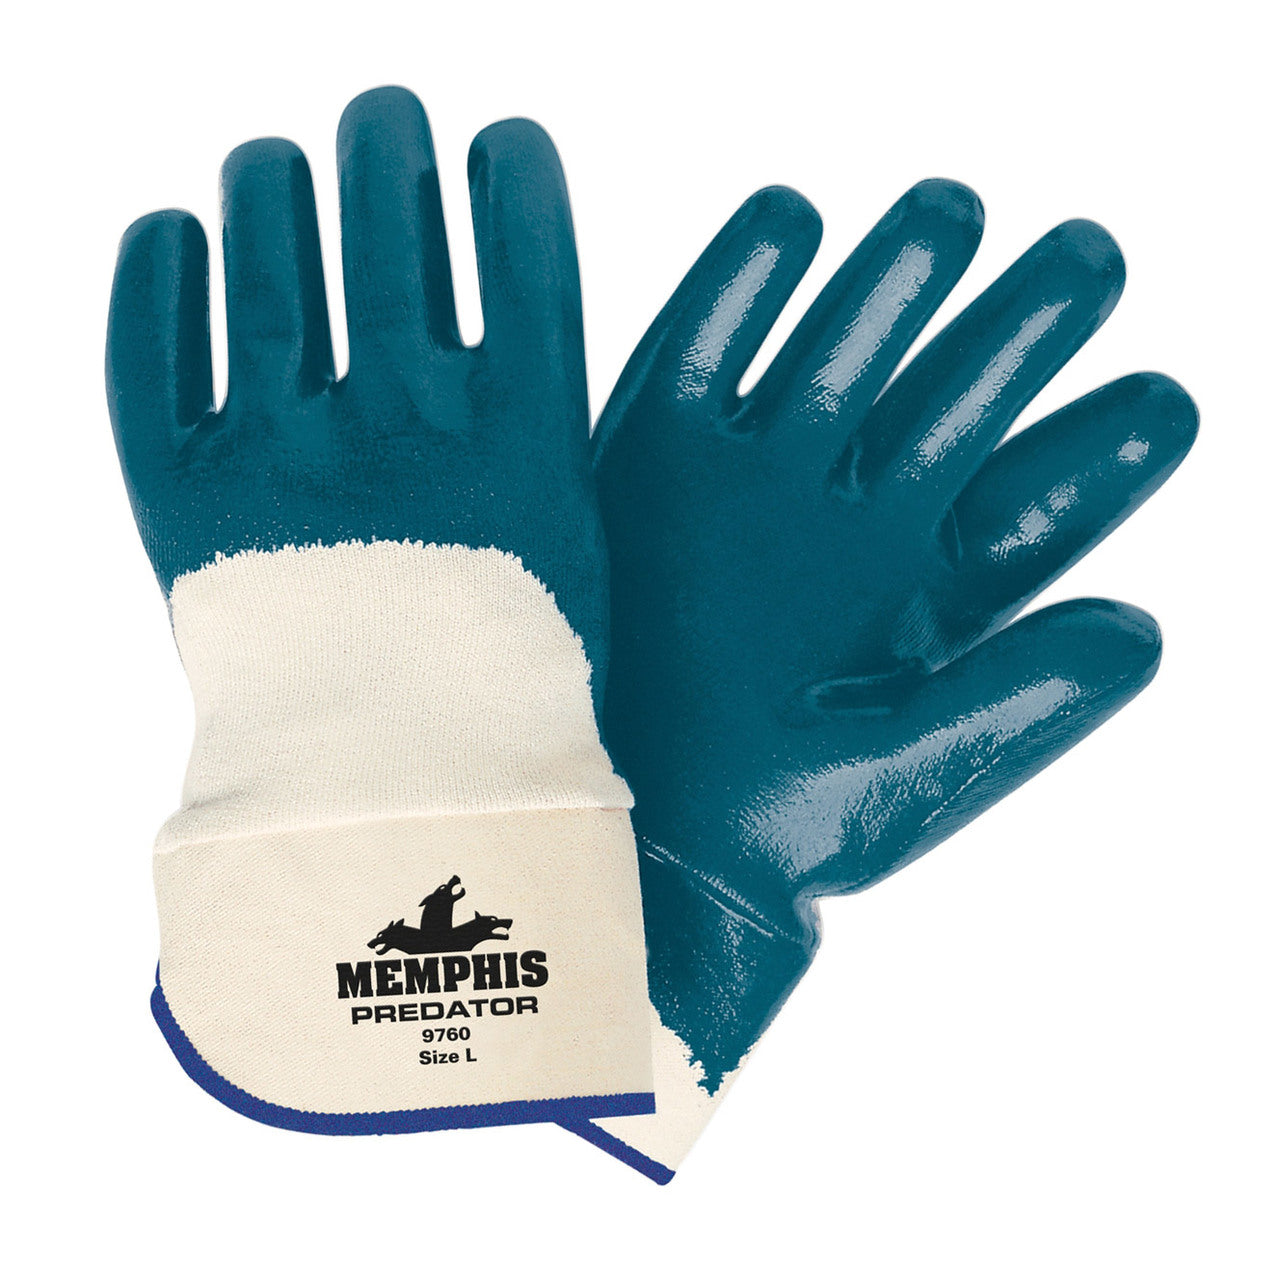 Memphis Palm Coated Predator Thick Premium Nitrile Gloves, 9760